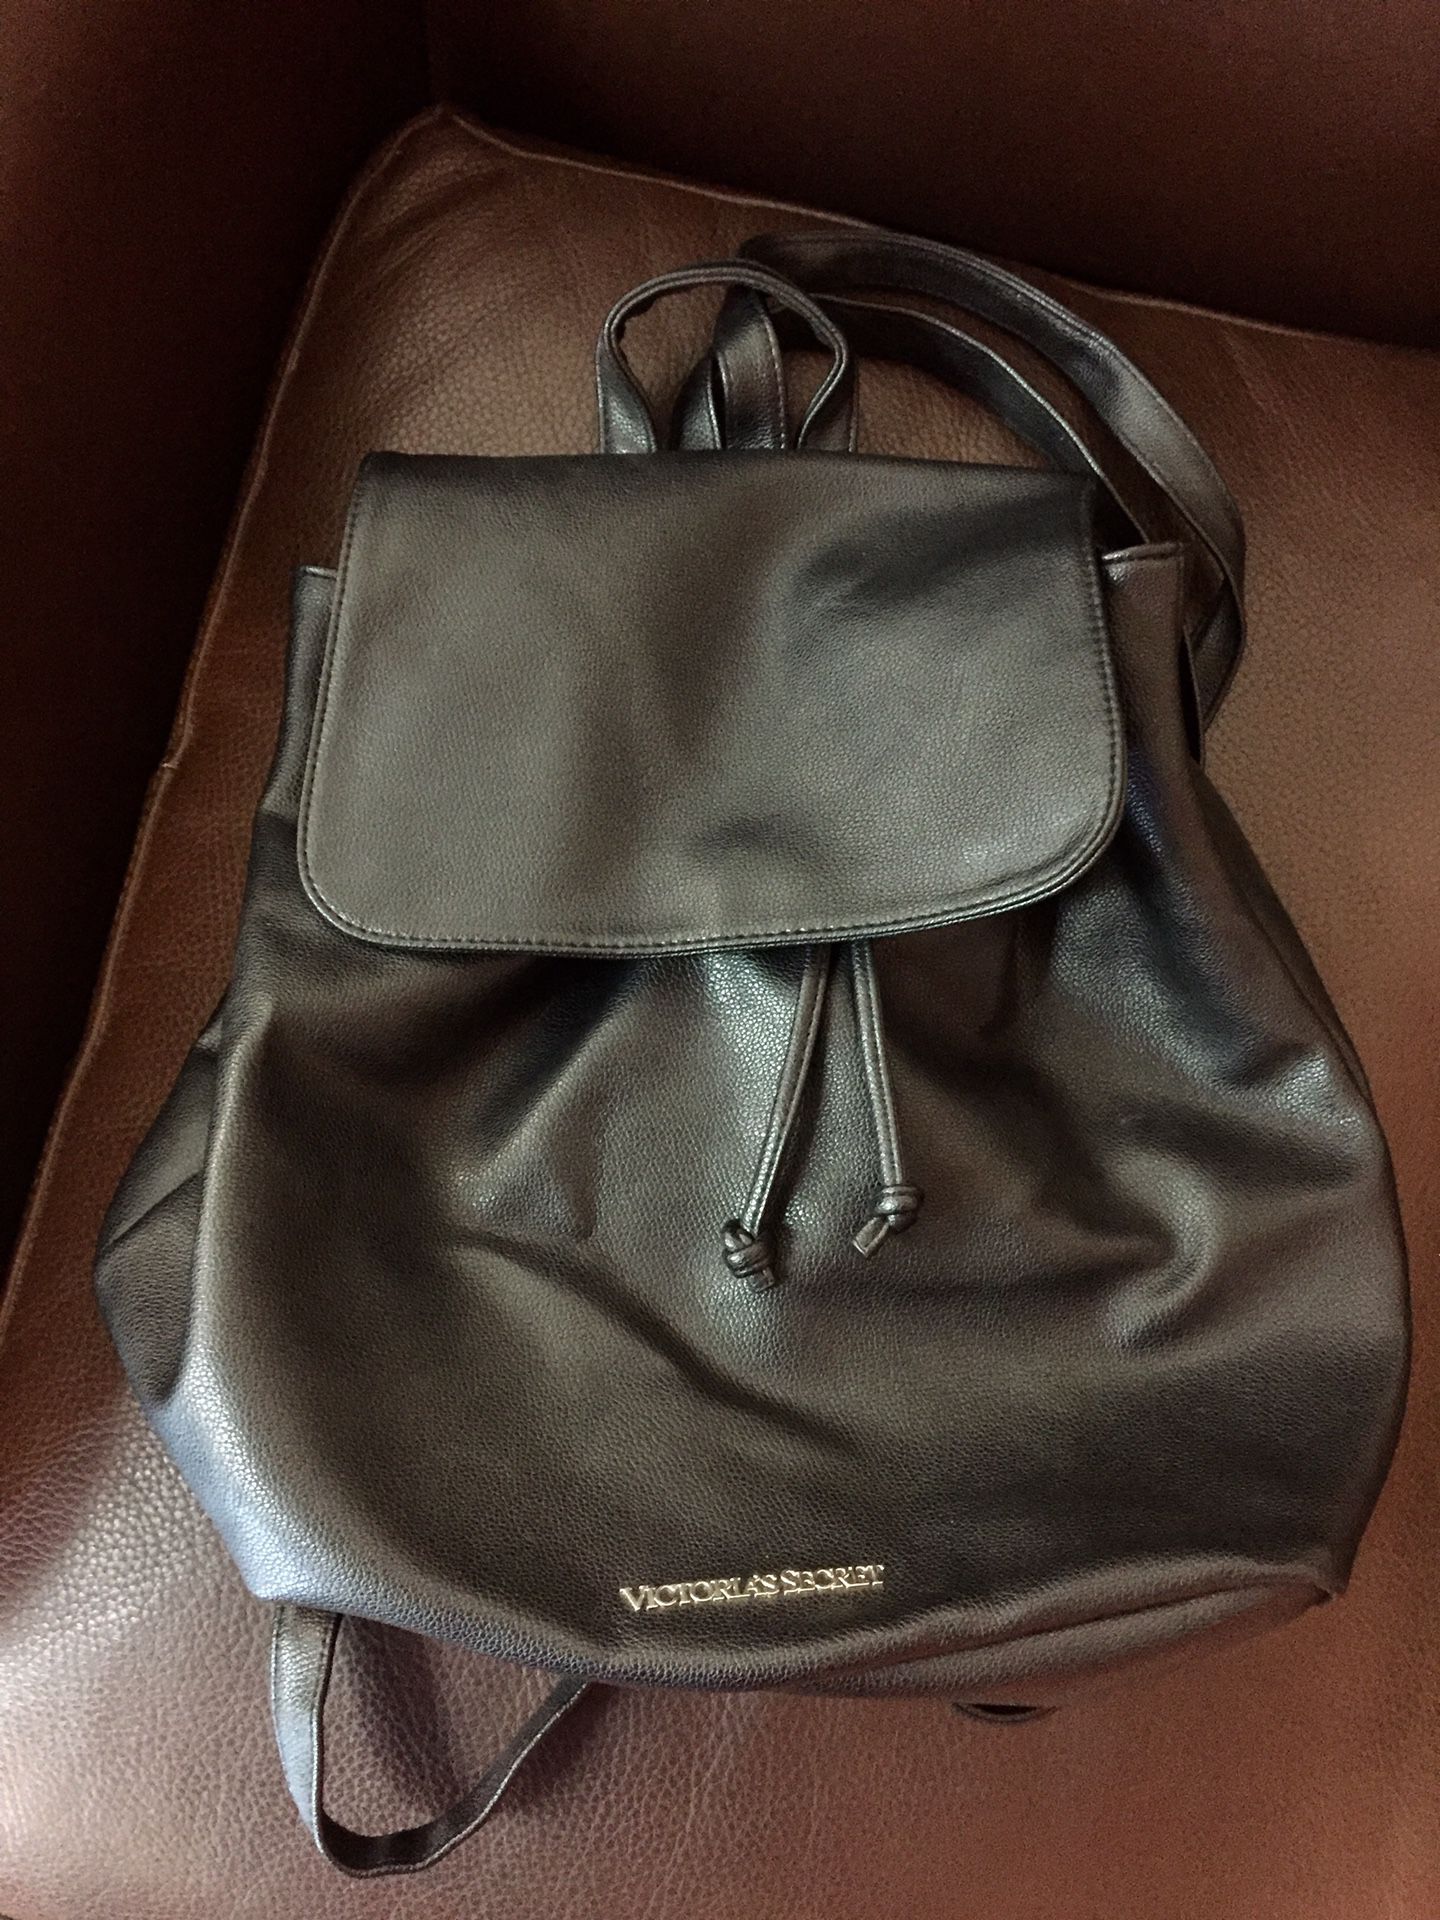 Victoria’s Secret black backpack purse